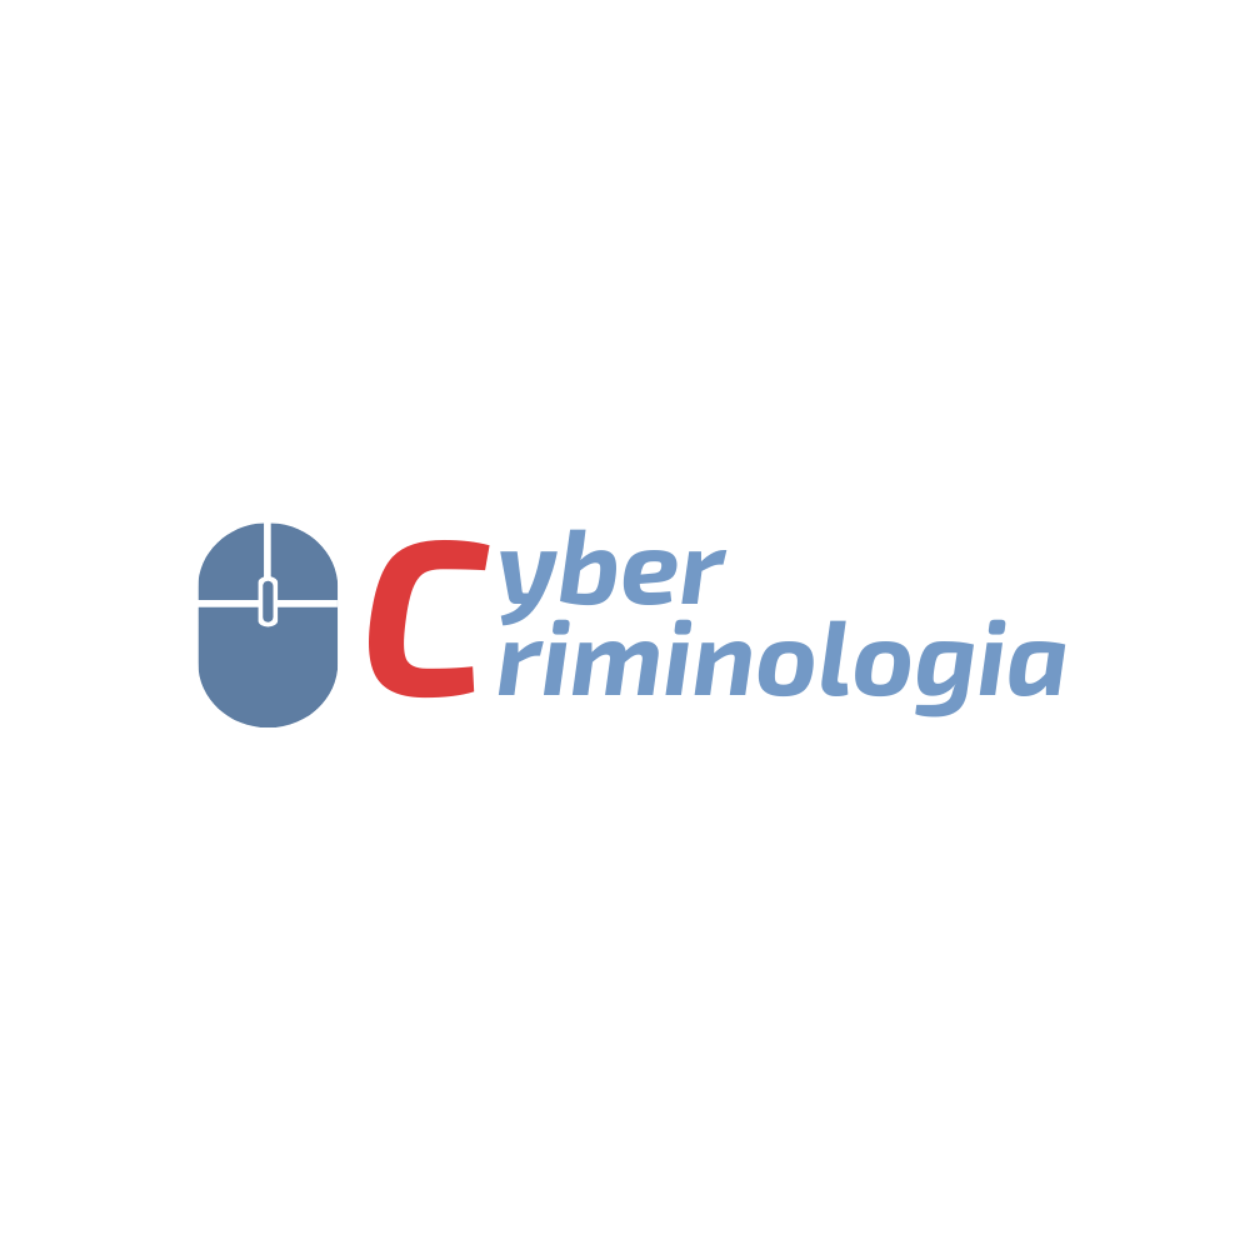 Master online Cyber Criminologia | ID S.O.F.I.A.: 82251